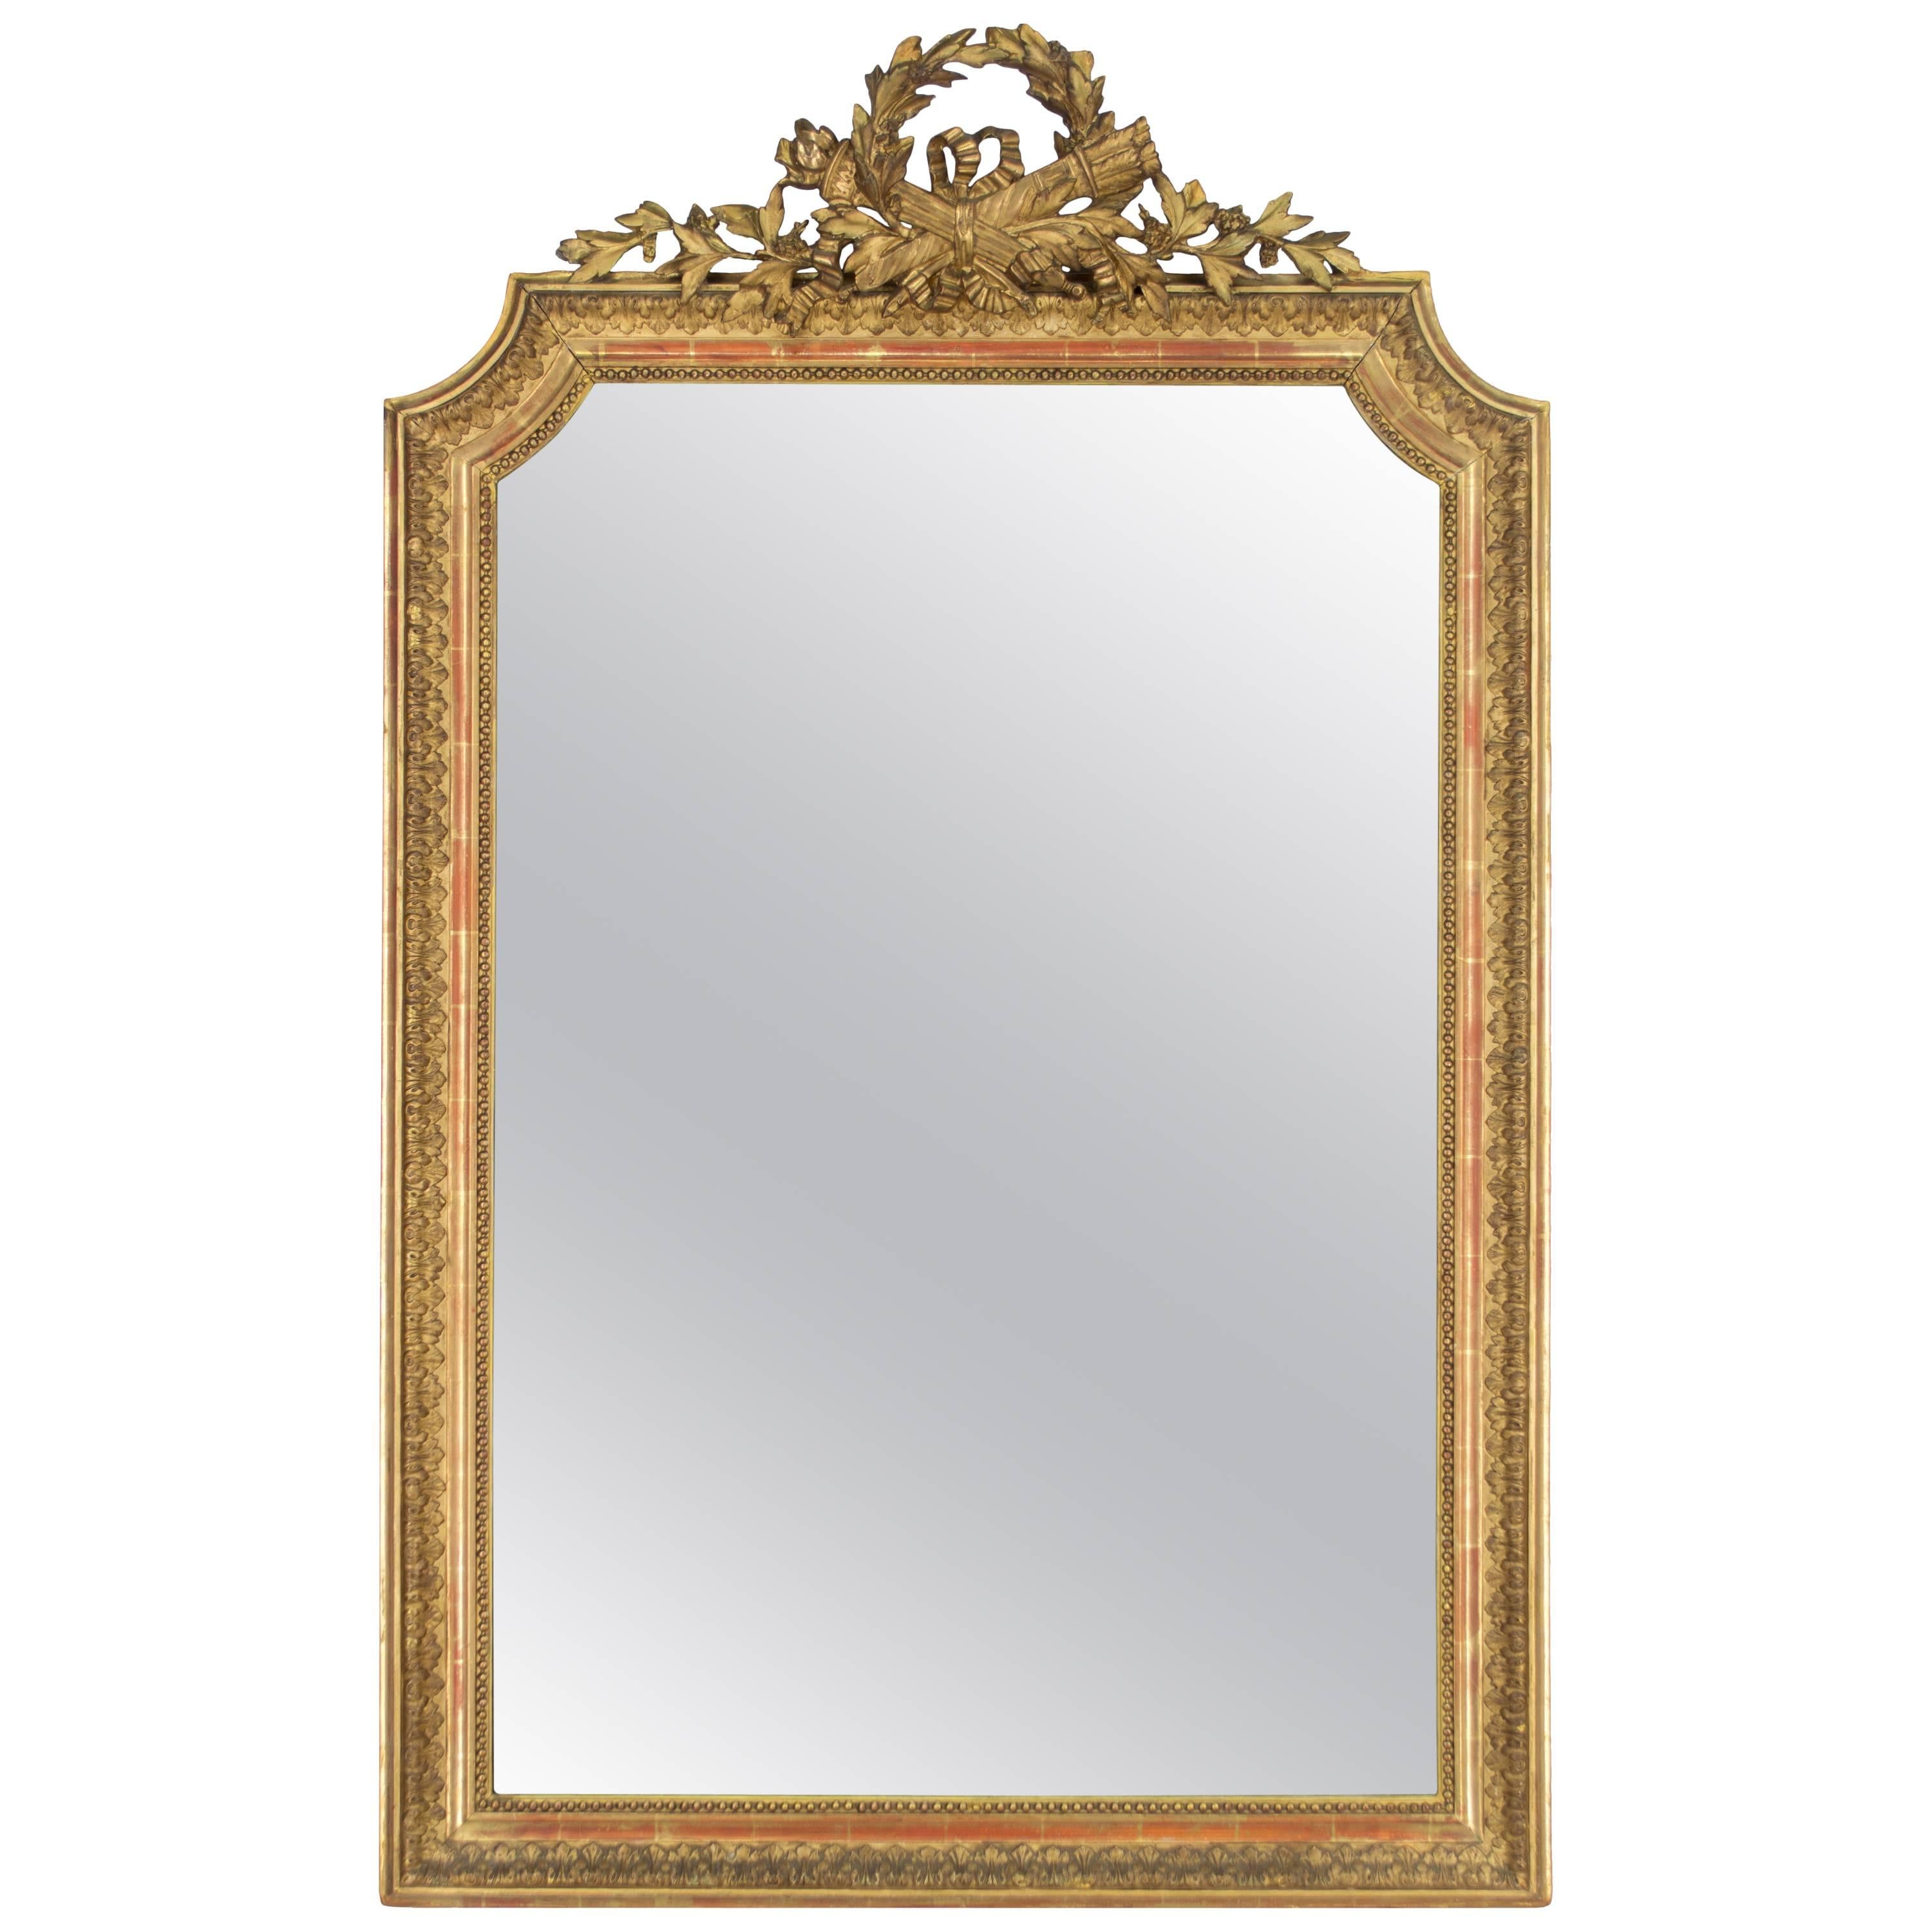 19th Century French Louis XVI Style Gilded Mirror